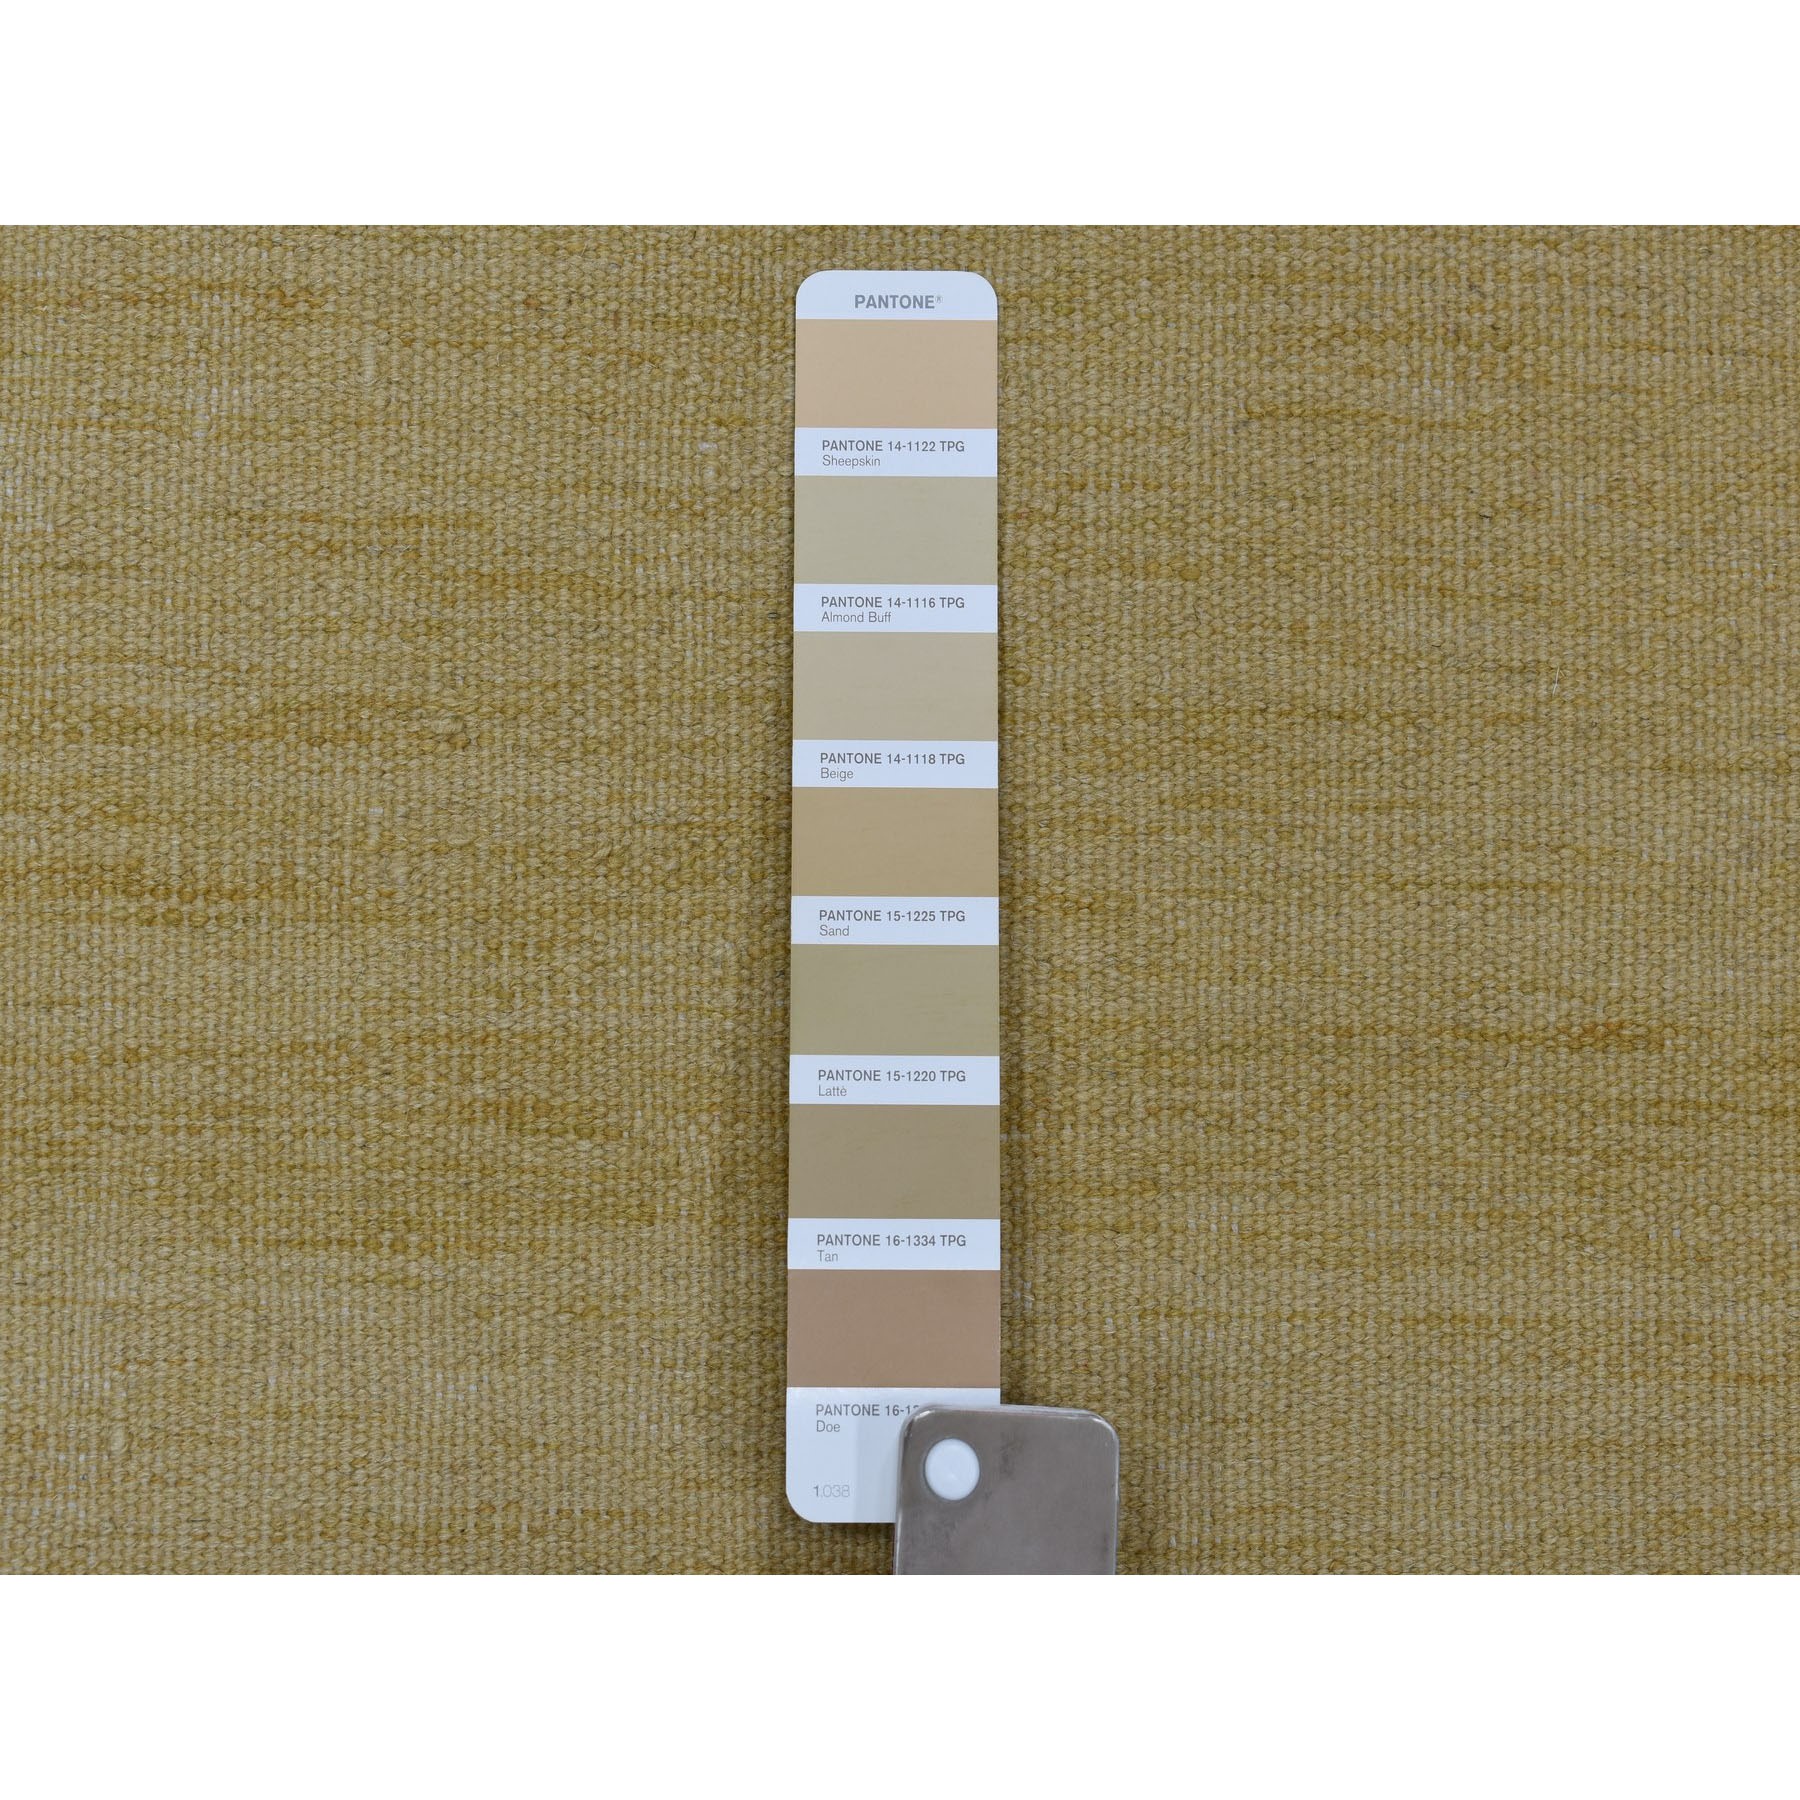 2-4 x6-6  Yellow Shades Flat Weave Kilim Pure Wool Hand Woven Runner Oriental Rug 